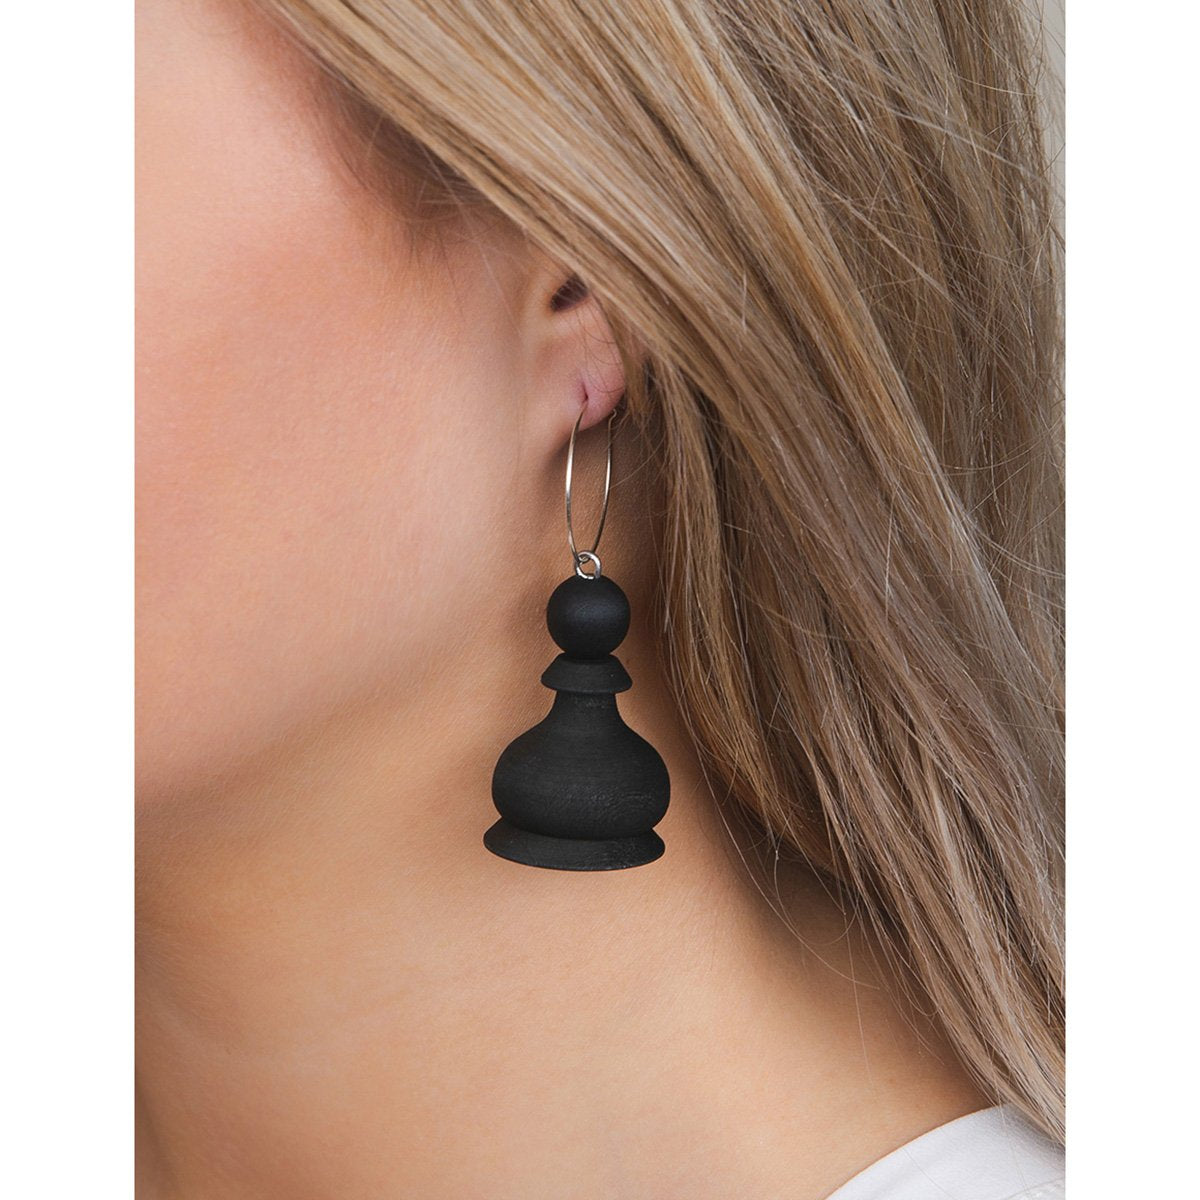 Sotilas earrings, black